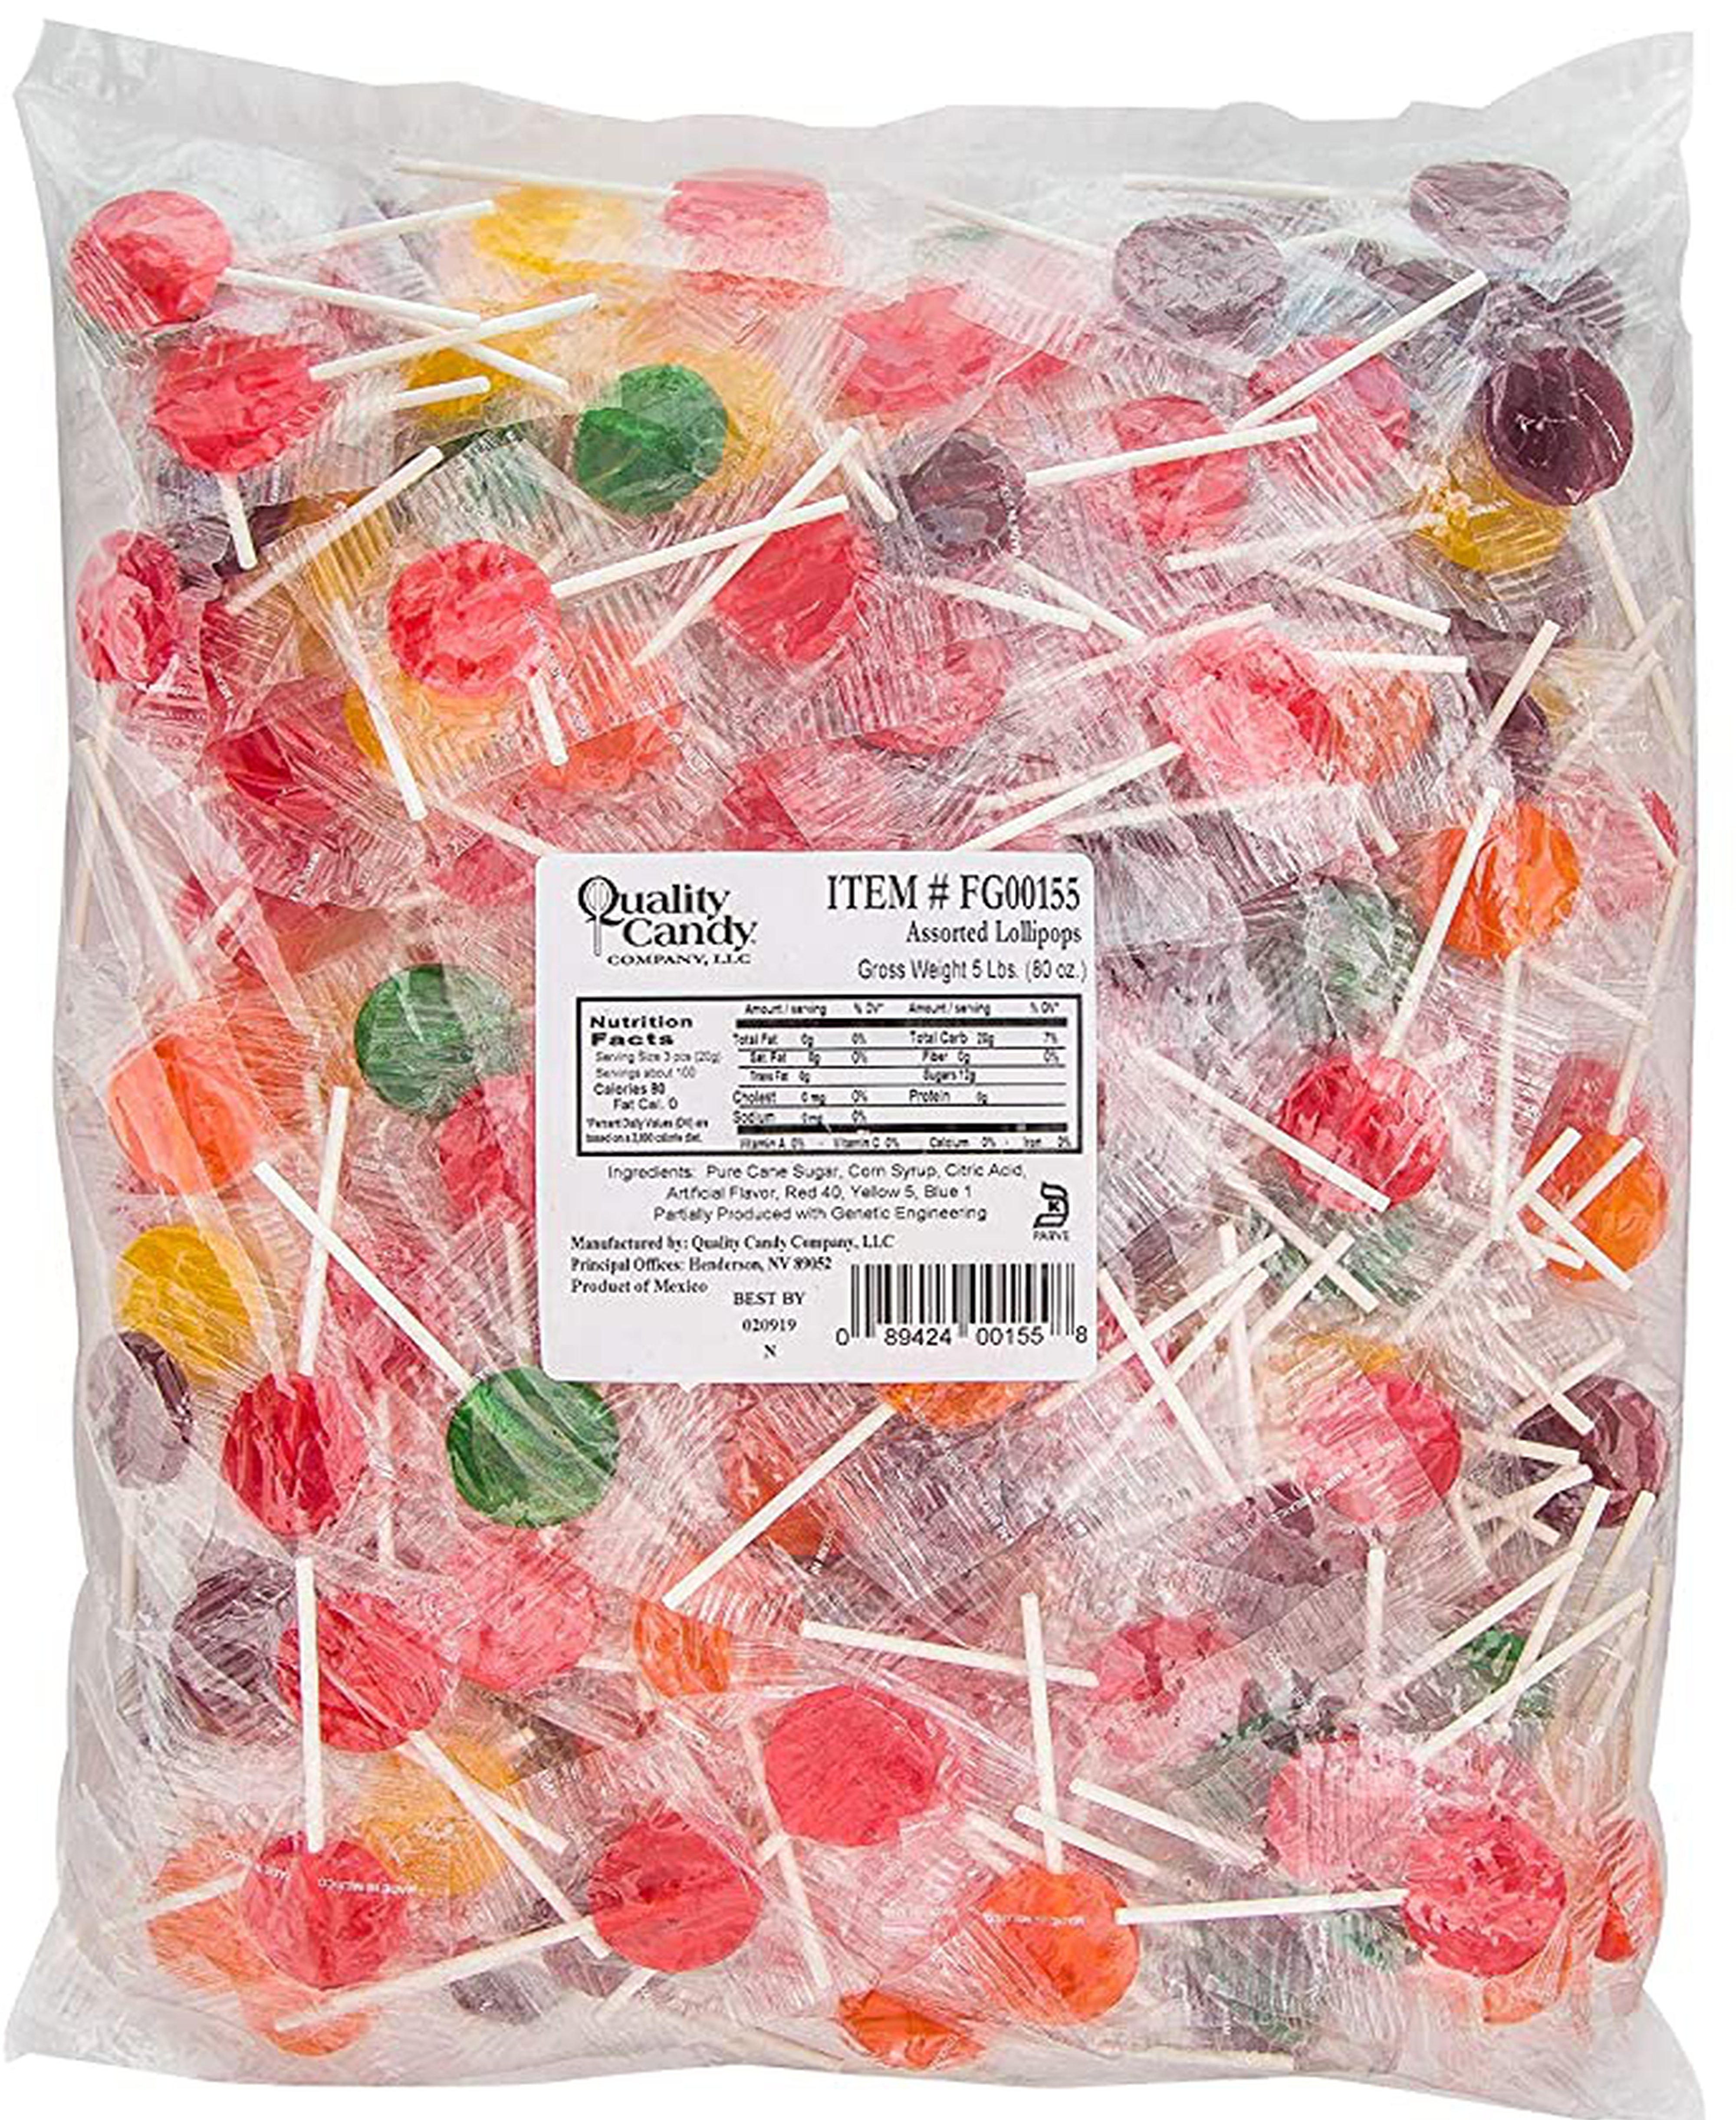 Quality Candy - Assorted Lollipops - 4 lb bag